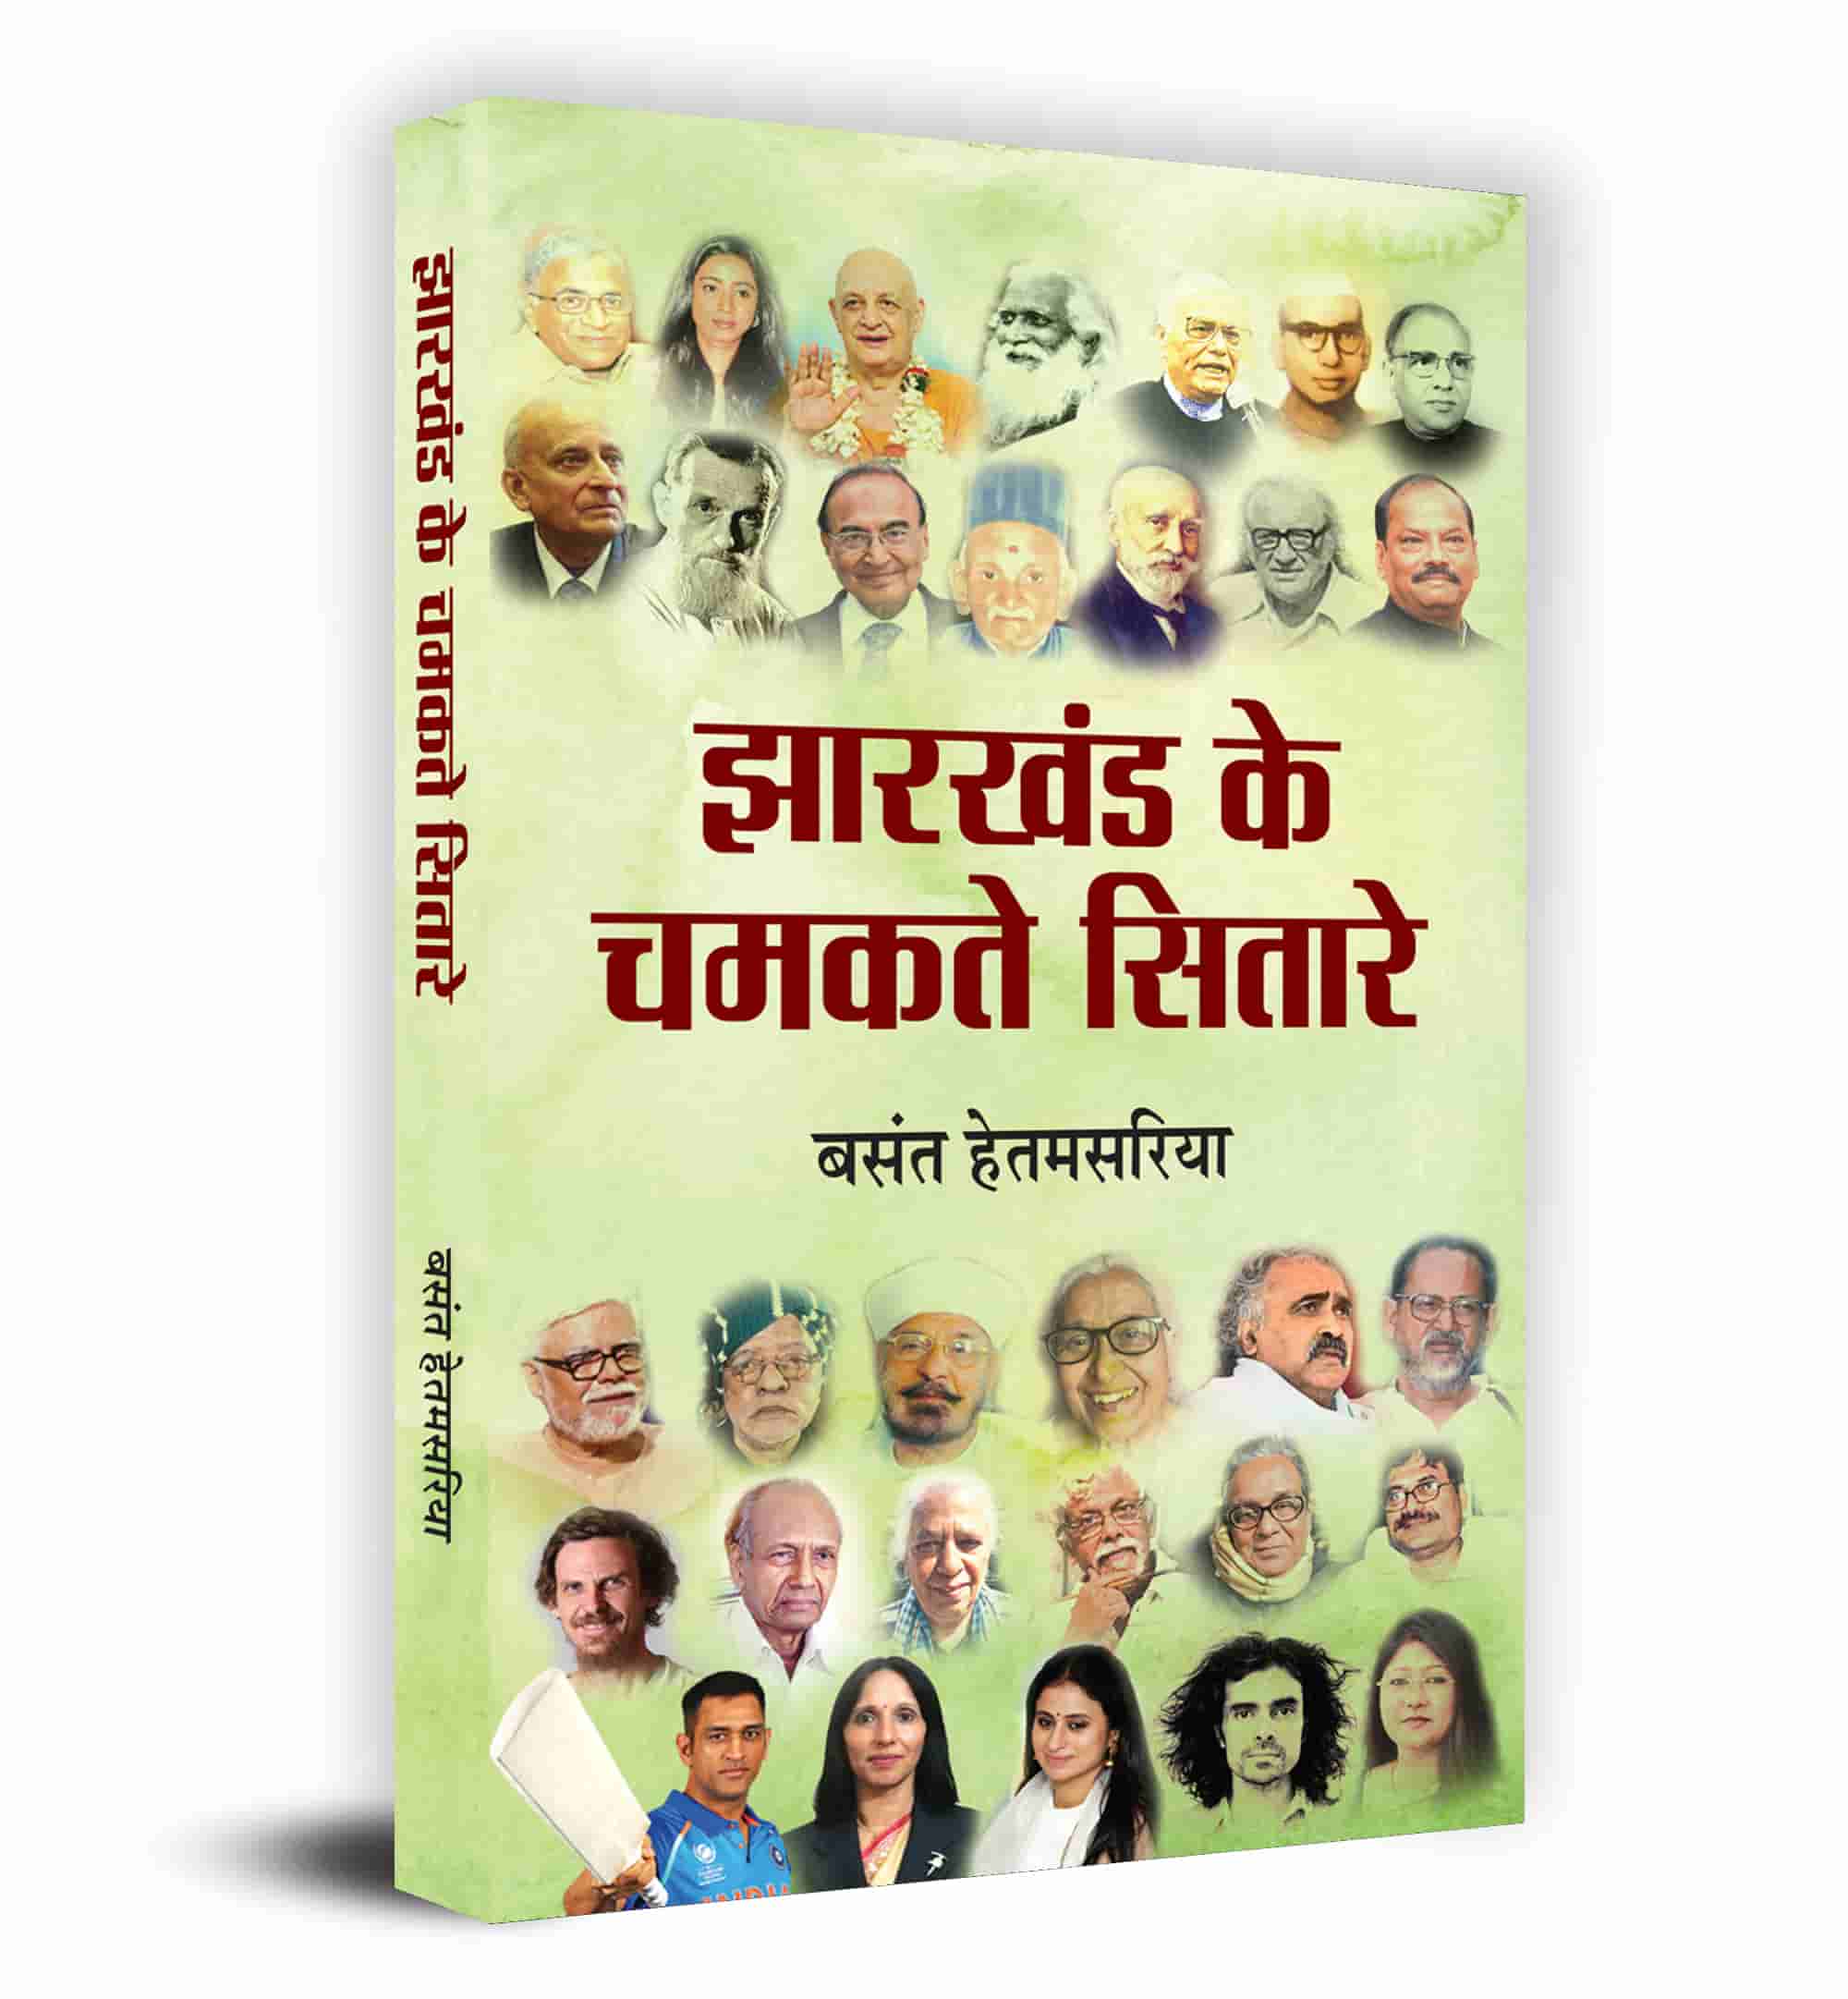 Jharkhand Ke Chamakte Sitare झारखंड के चमकते सितारे - Basant Hetamsaria Book in Hindi